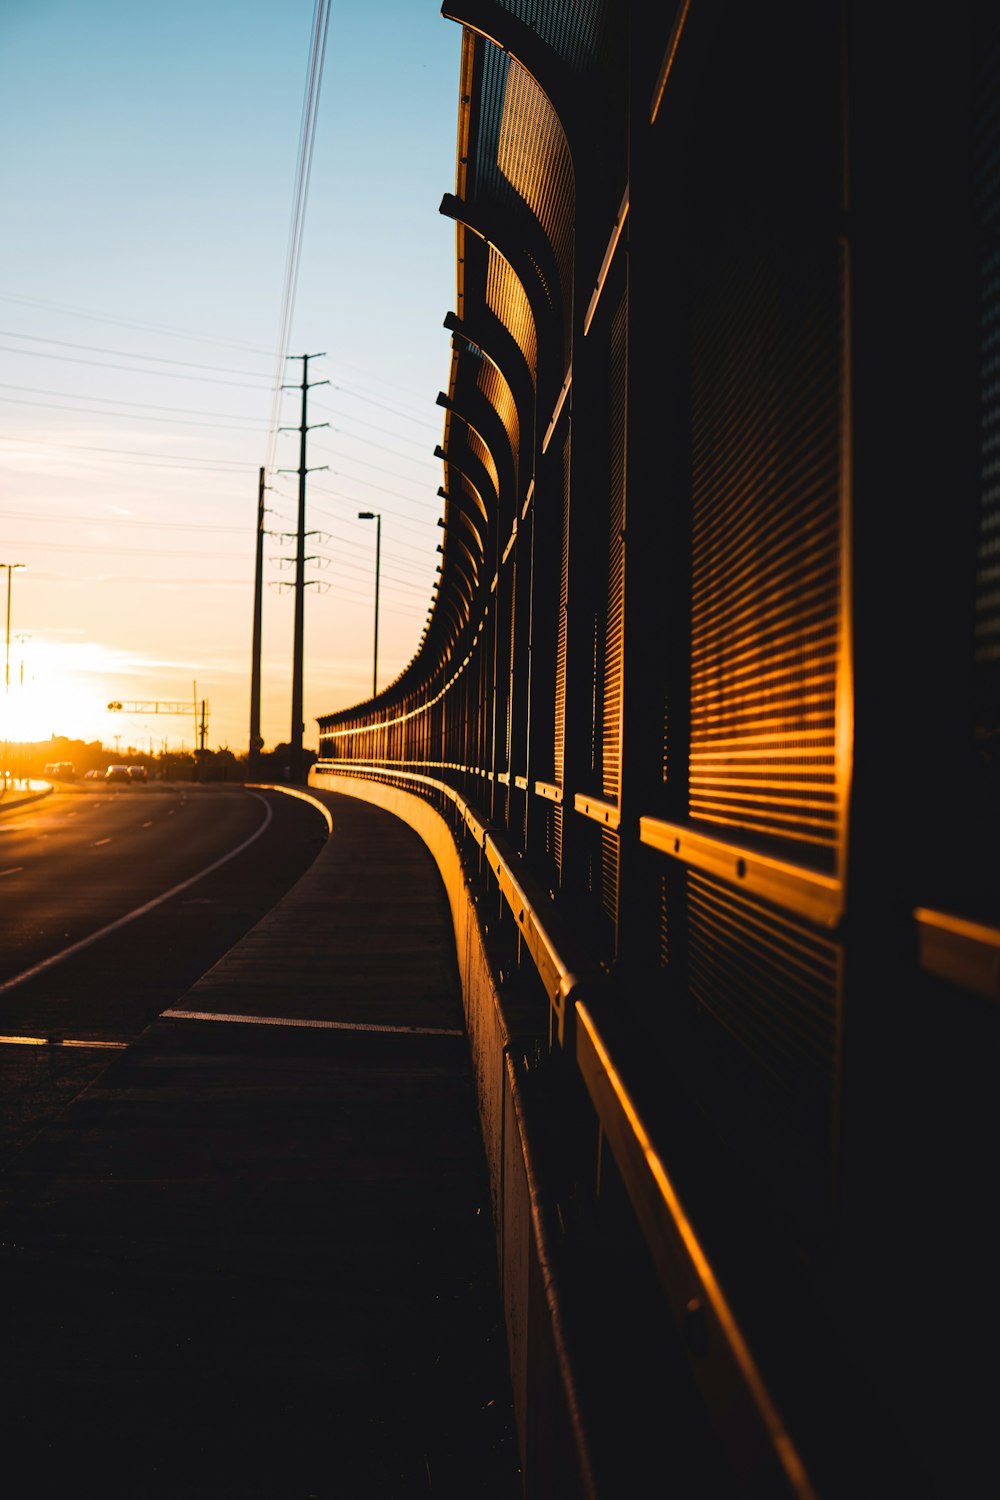 black and white train rail during sunset